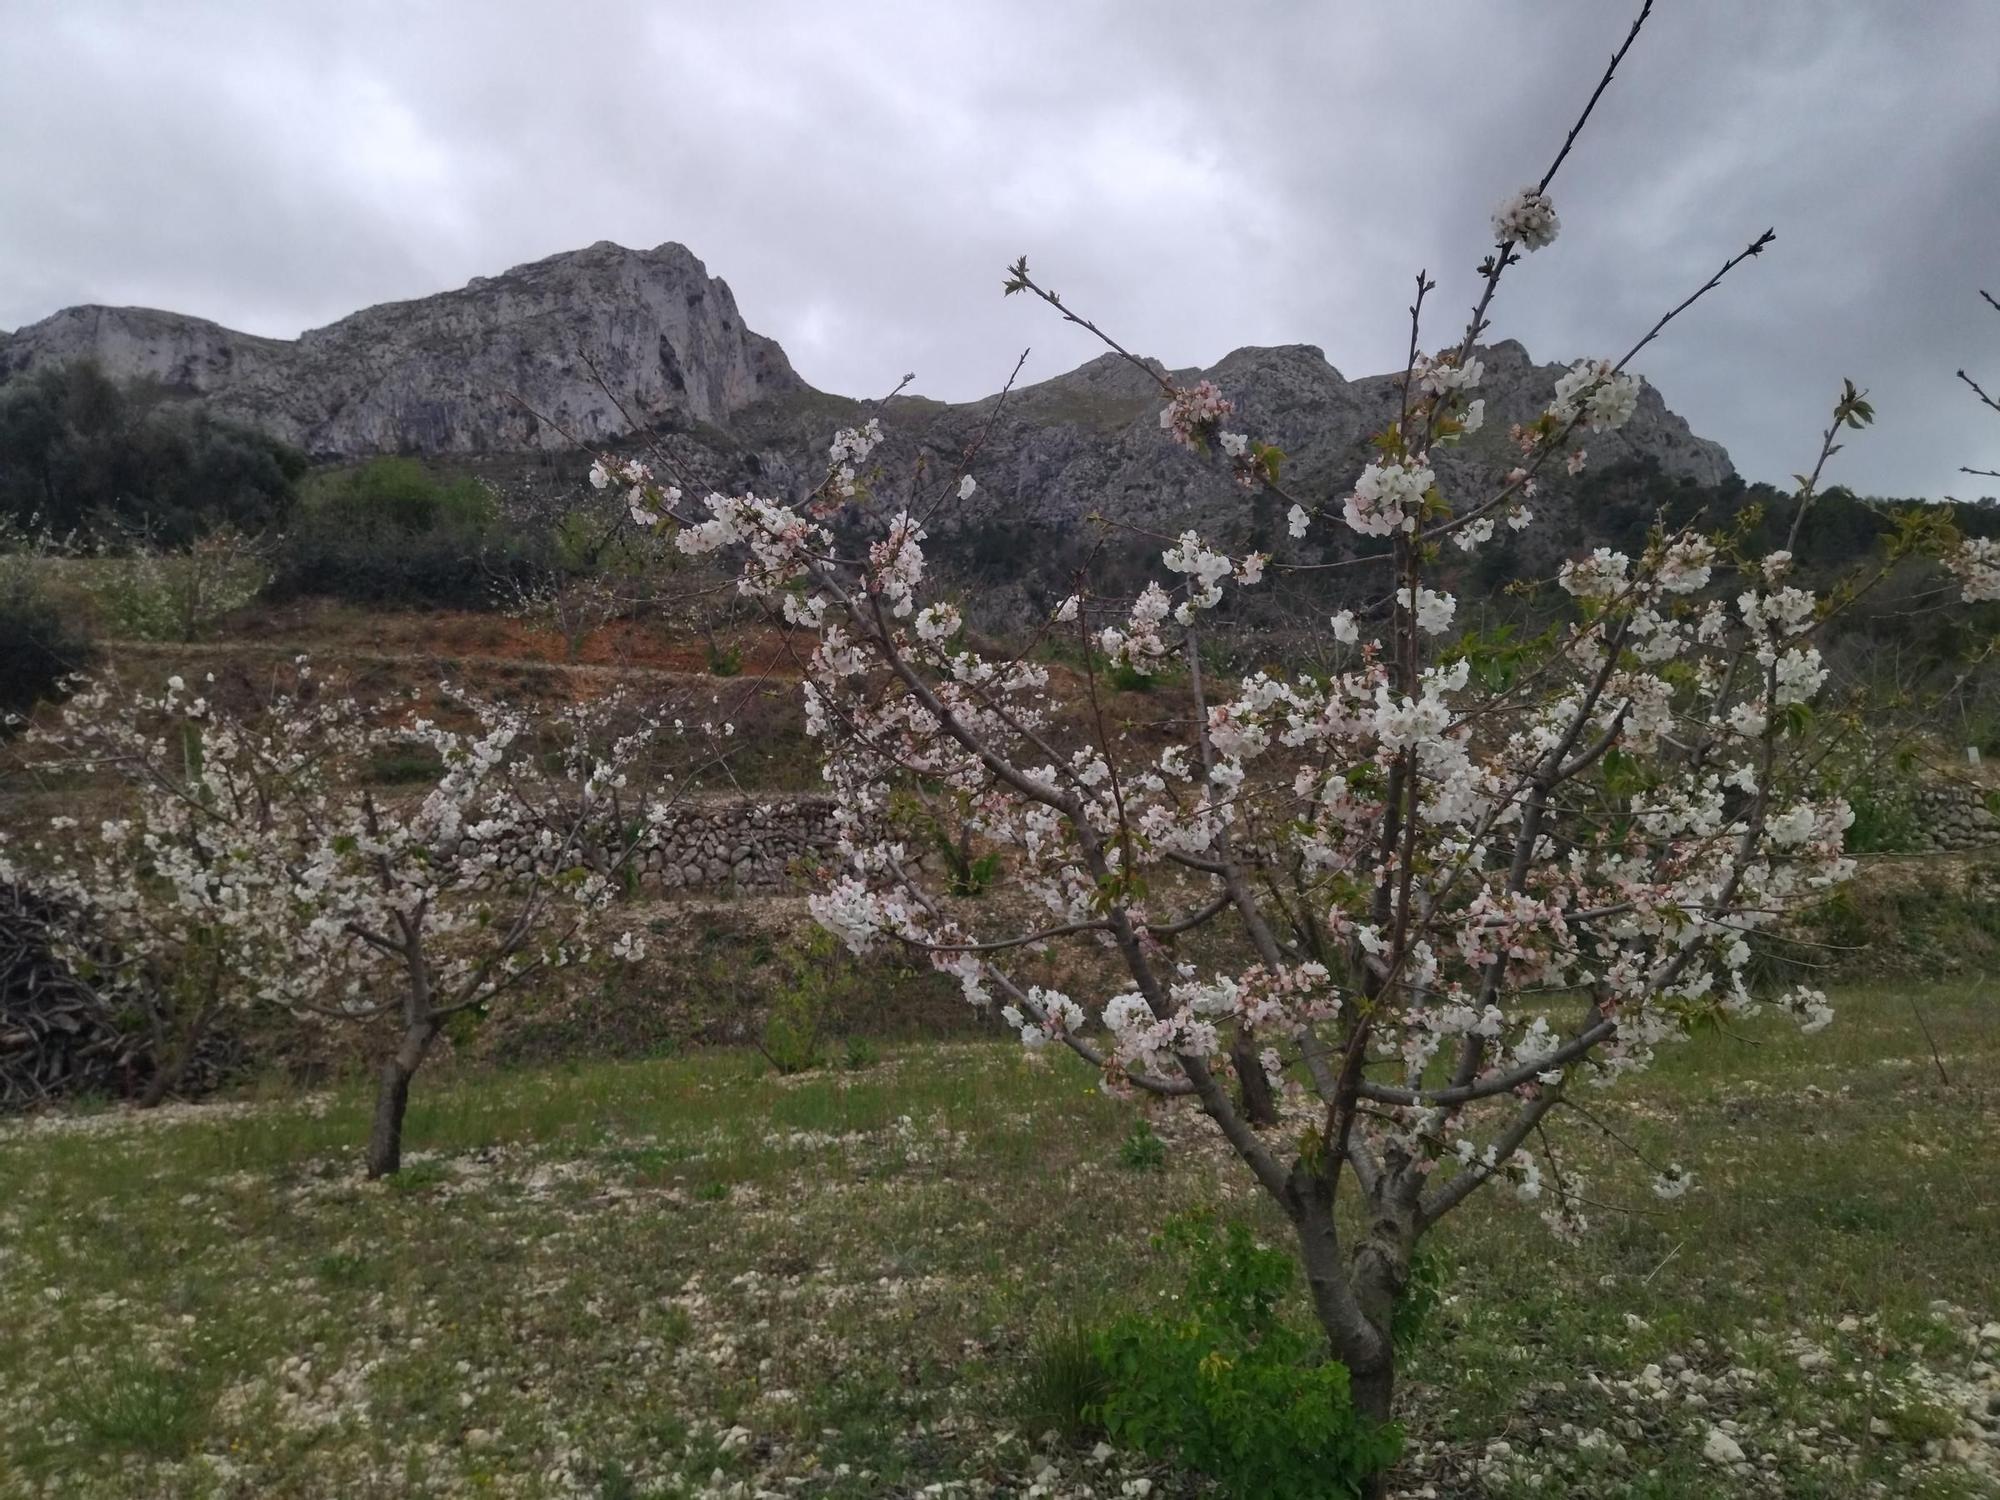 Llegar hasta el final: Benissili y Llombai, maravillas en la "ruta dels 8 pobles" de la Vall de Gallinera (imágenes)